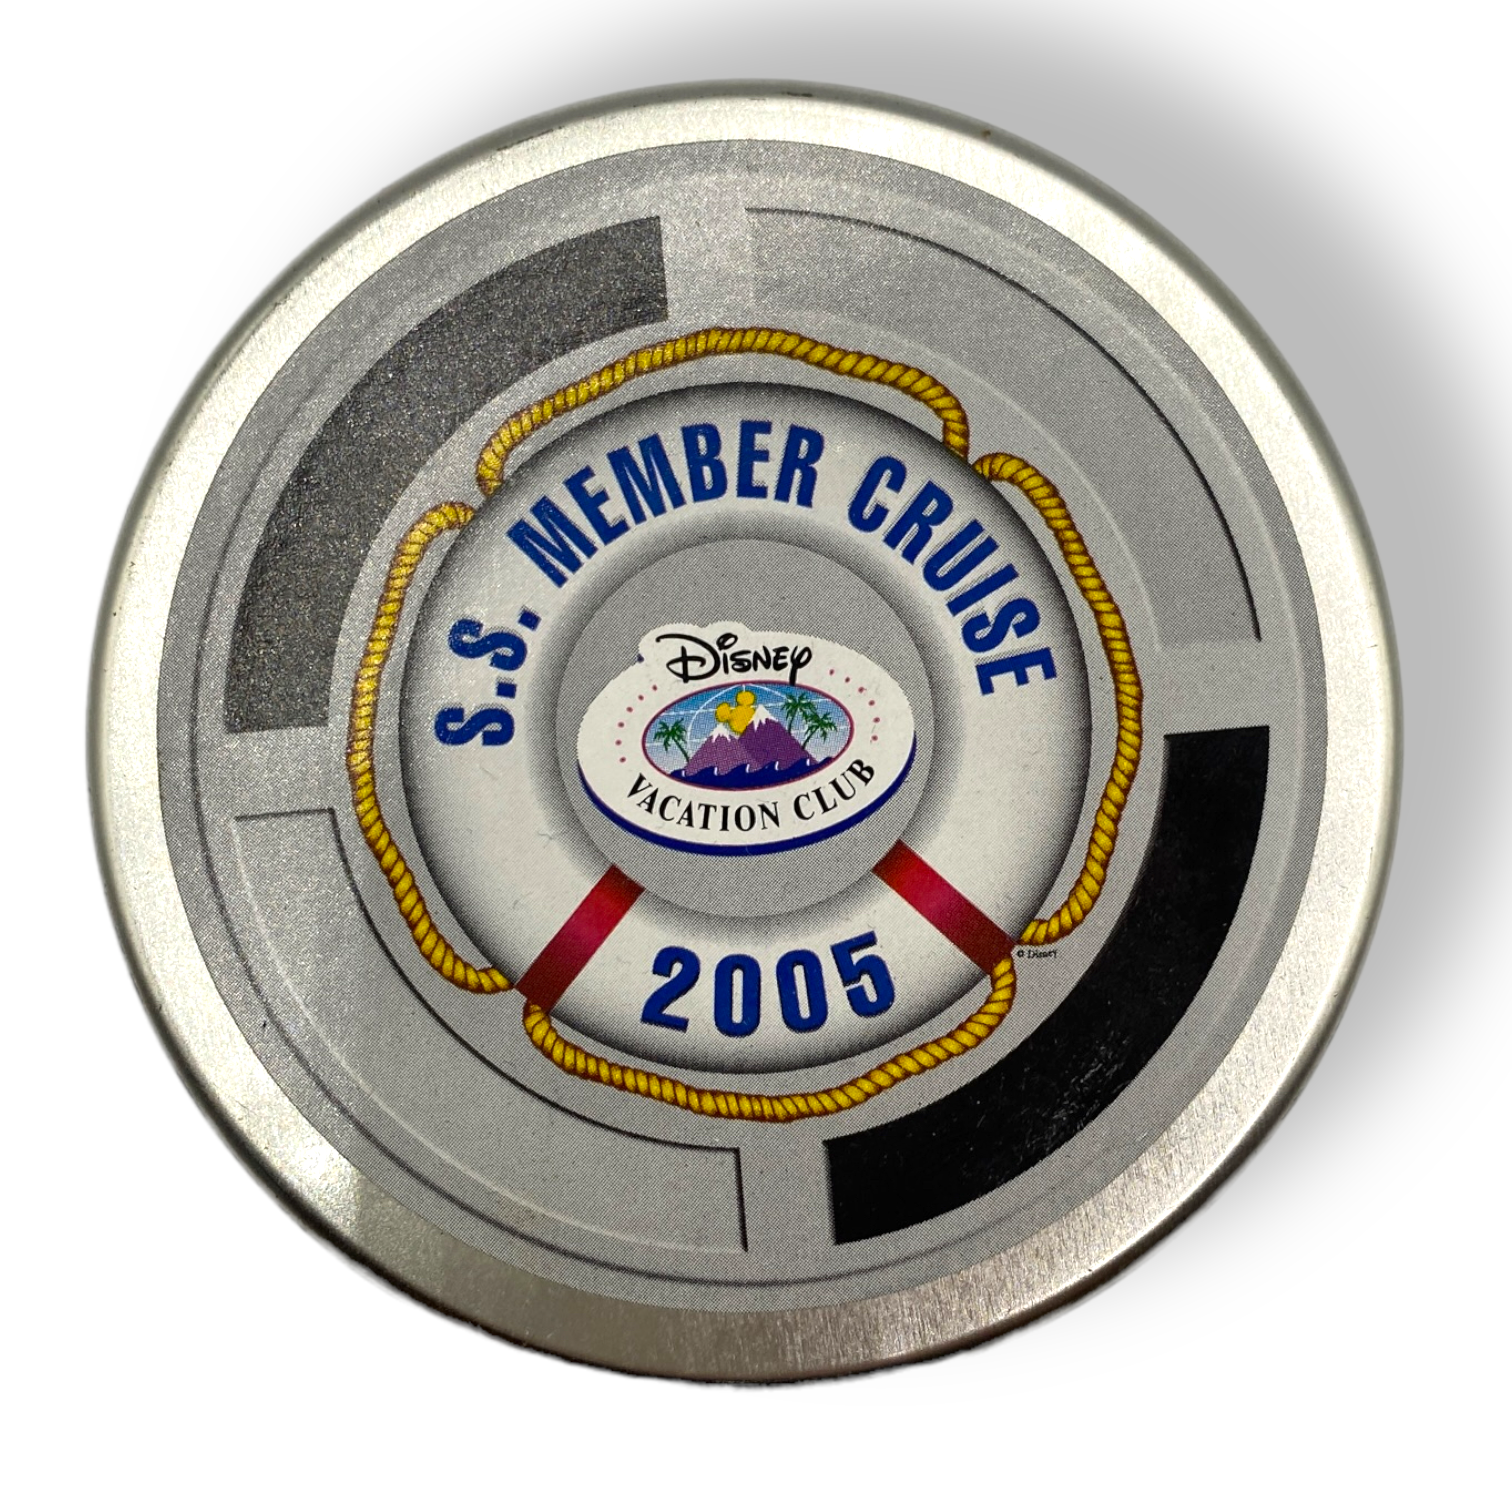 S.S. Member Cruise Mickey Band Leader Pin